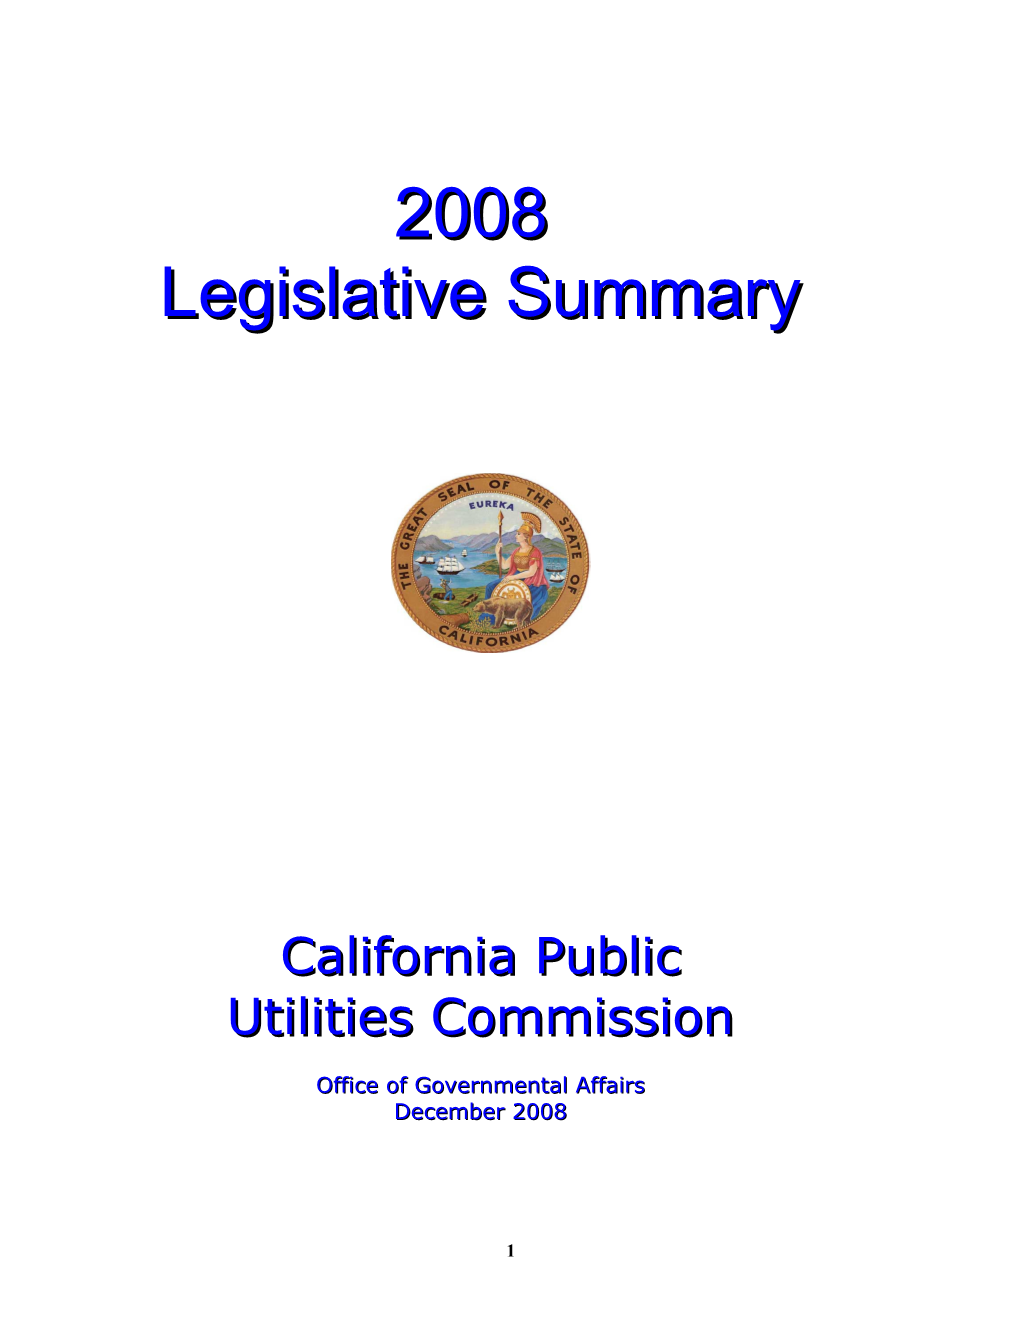 Summary of 2008 Legislation